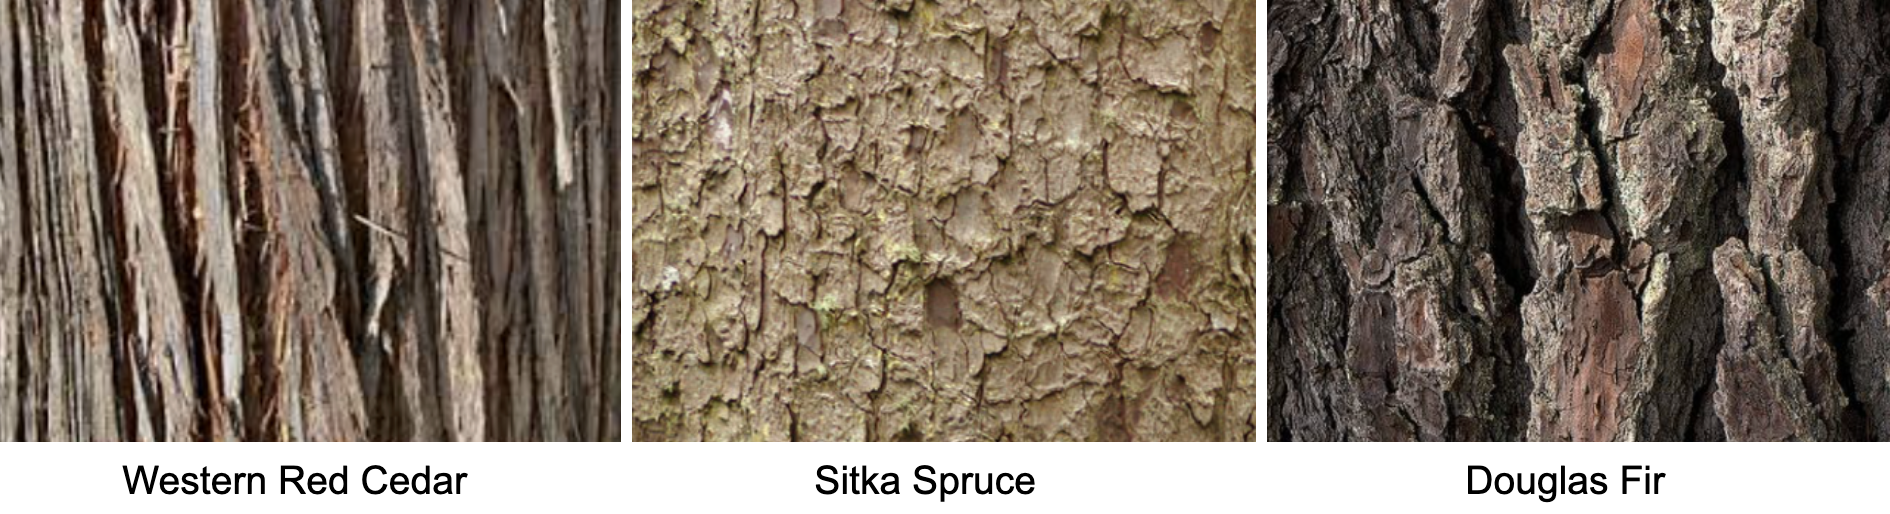 Identifying Cedar, Spruce, and Fir Bark